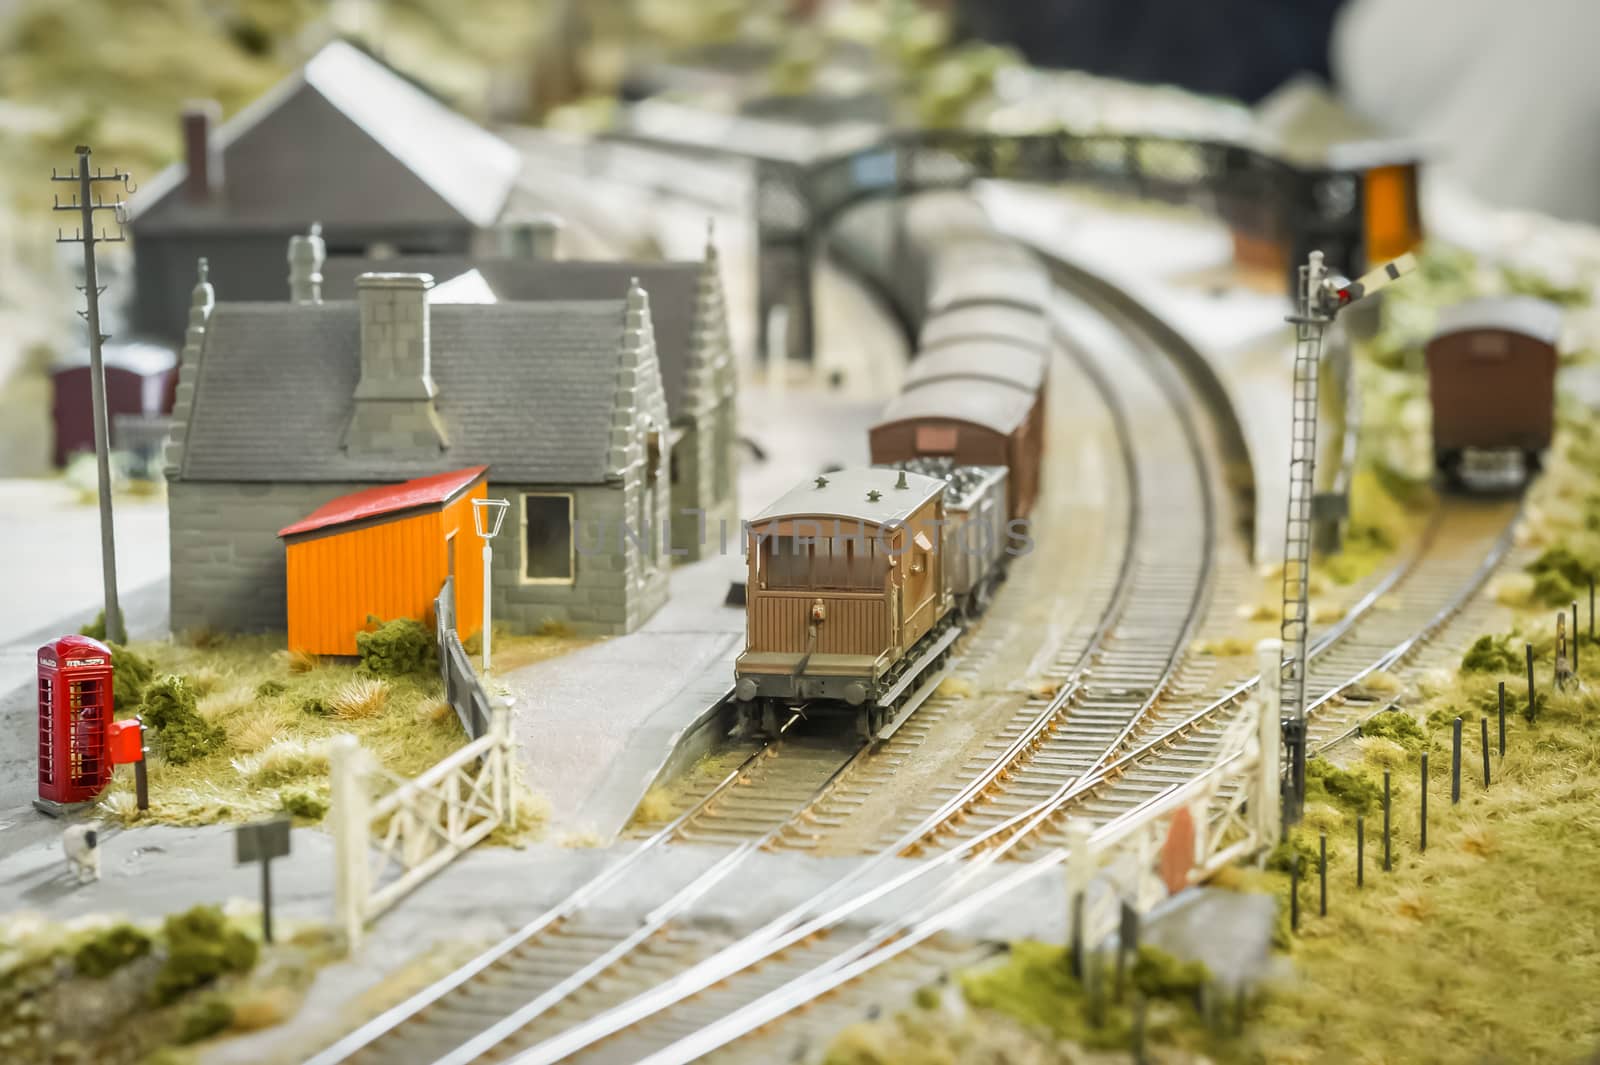 model railway station by nelsonart